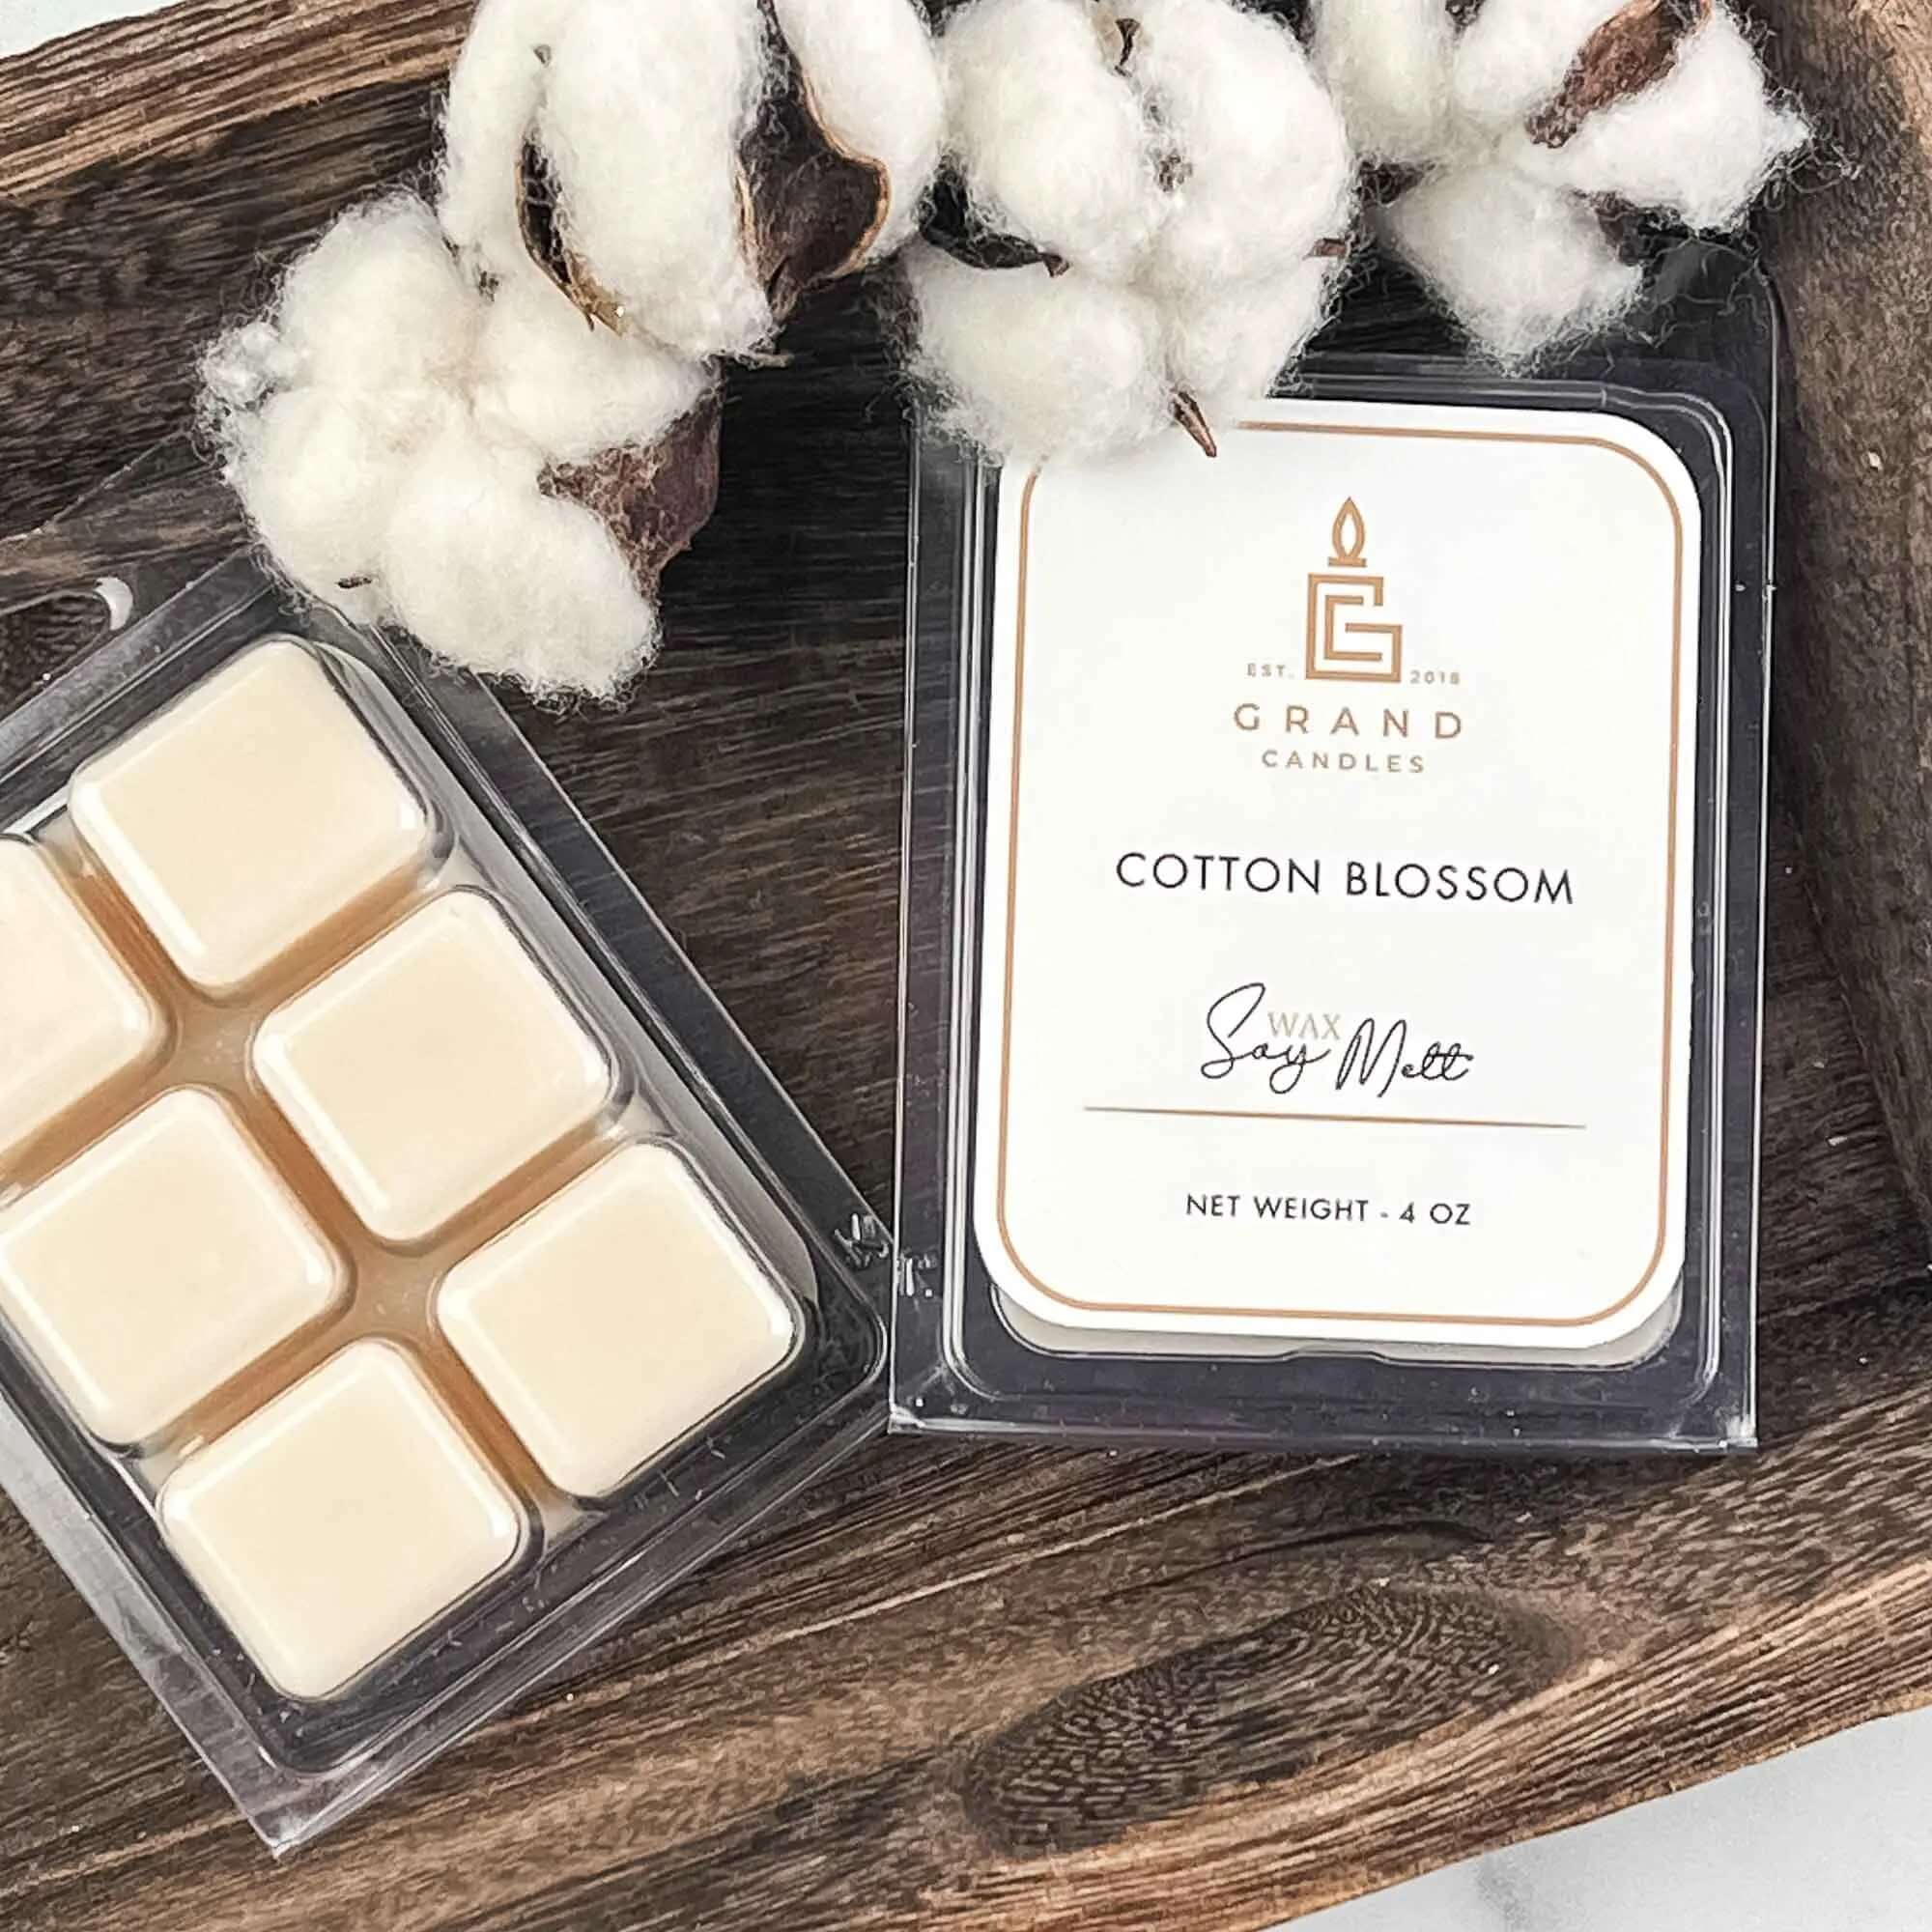 Cotton Blossom Soy Wax Melt Grand Candles LLC